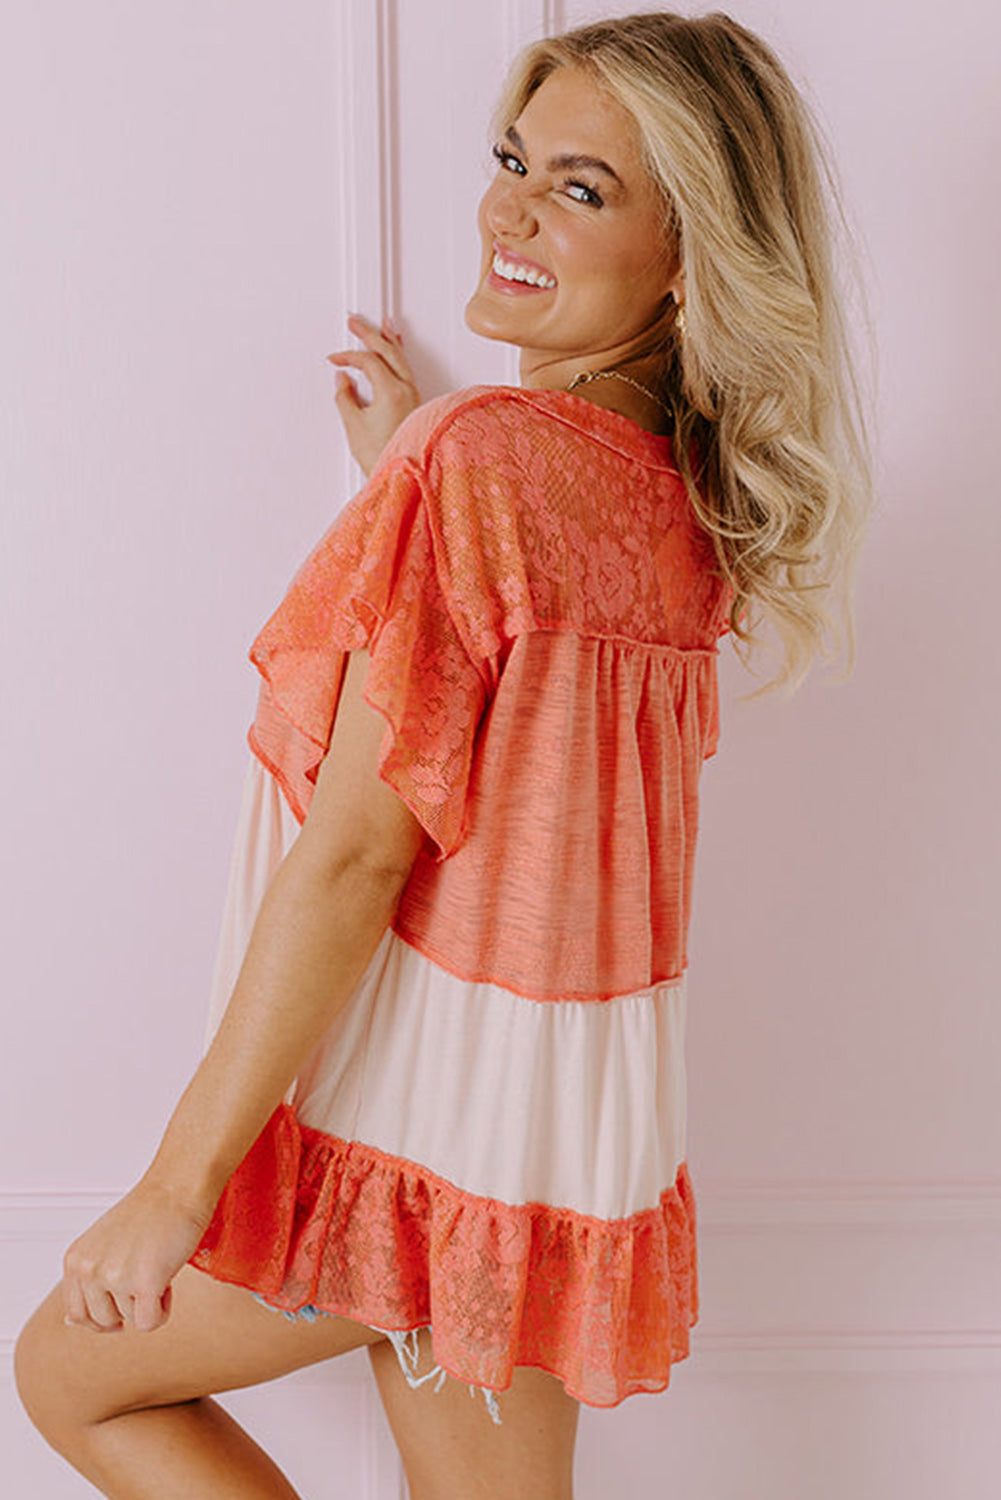 Grapefruit Orange Ruffled Lace Exposed Seam Patchwork Babydoll Top Pre Order Tops JT's Designer Fashion